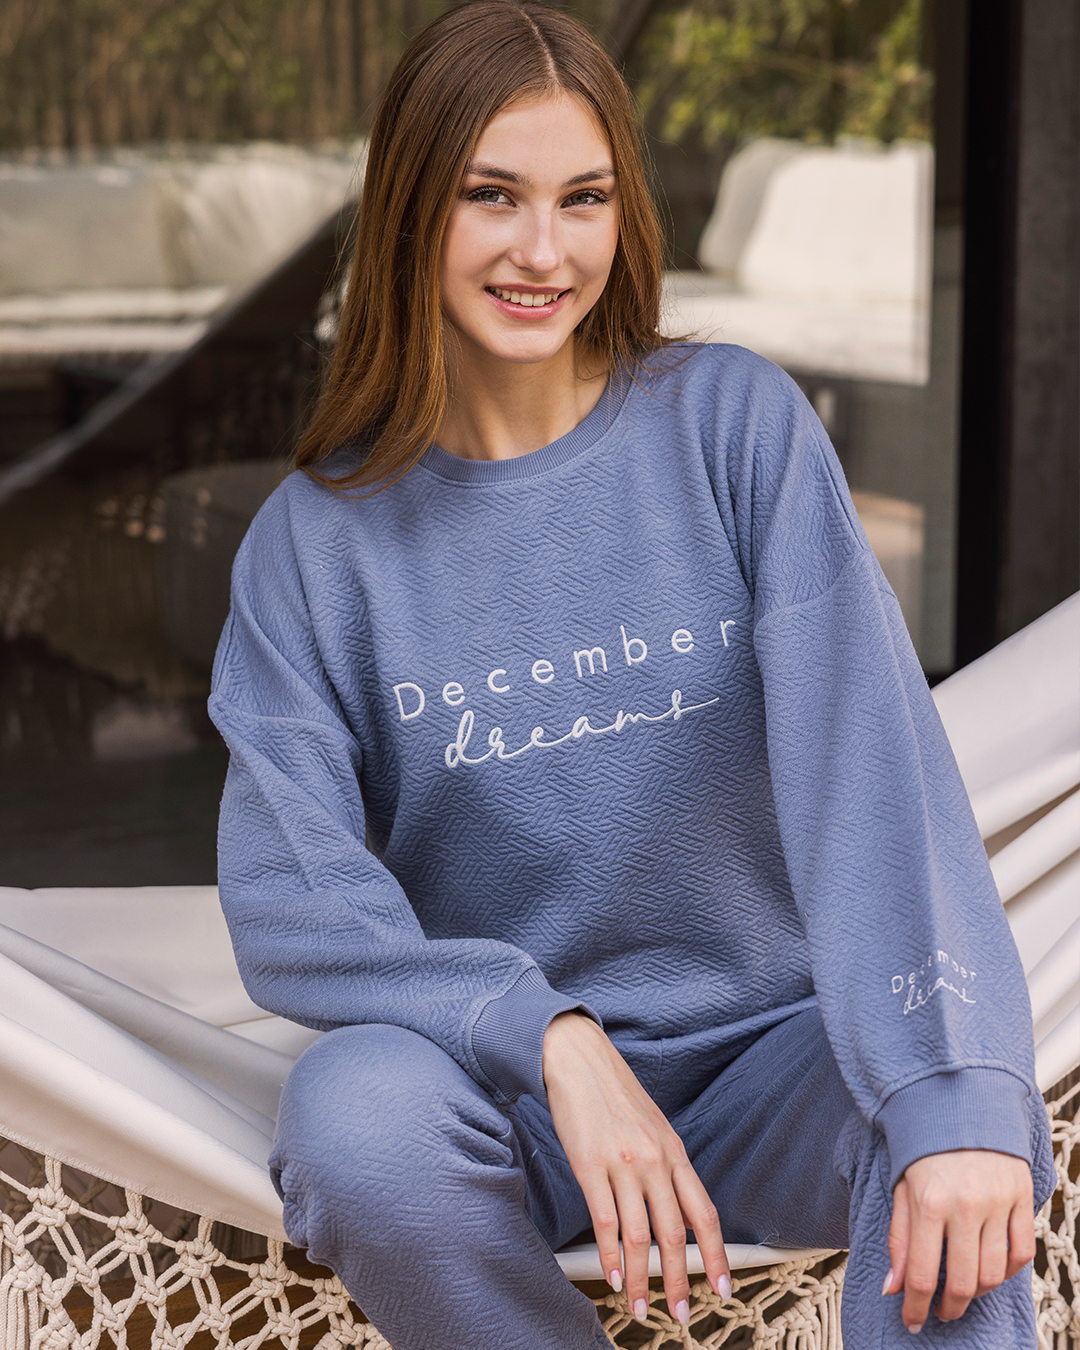 December Dreams Capitonese women's pajamas